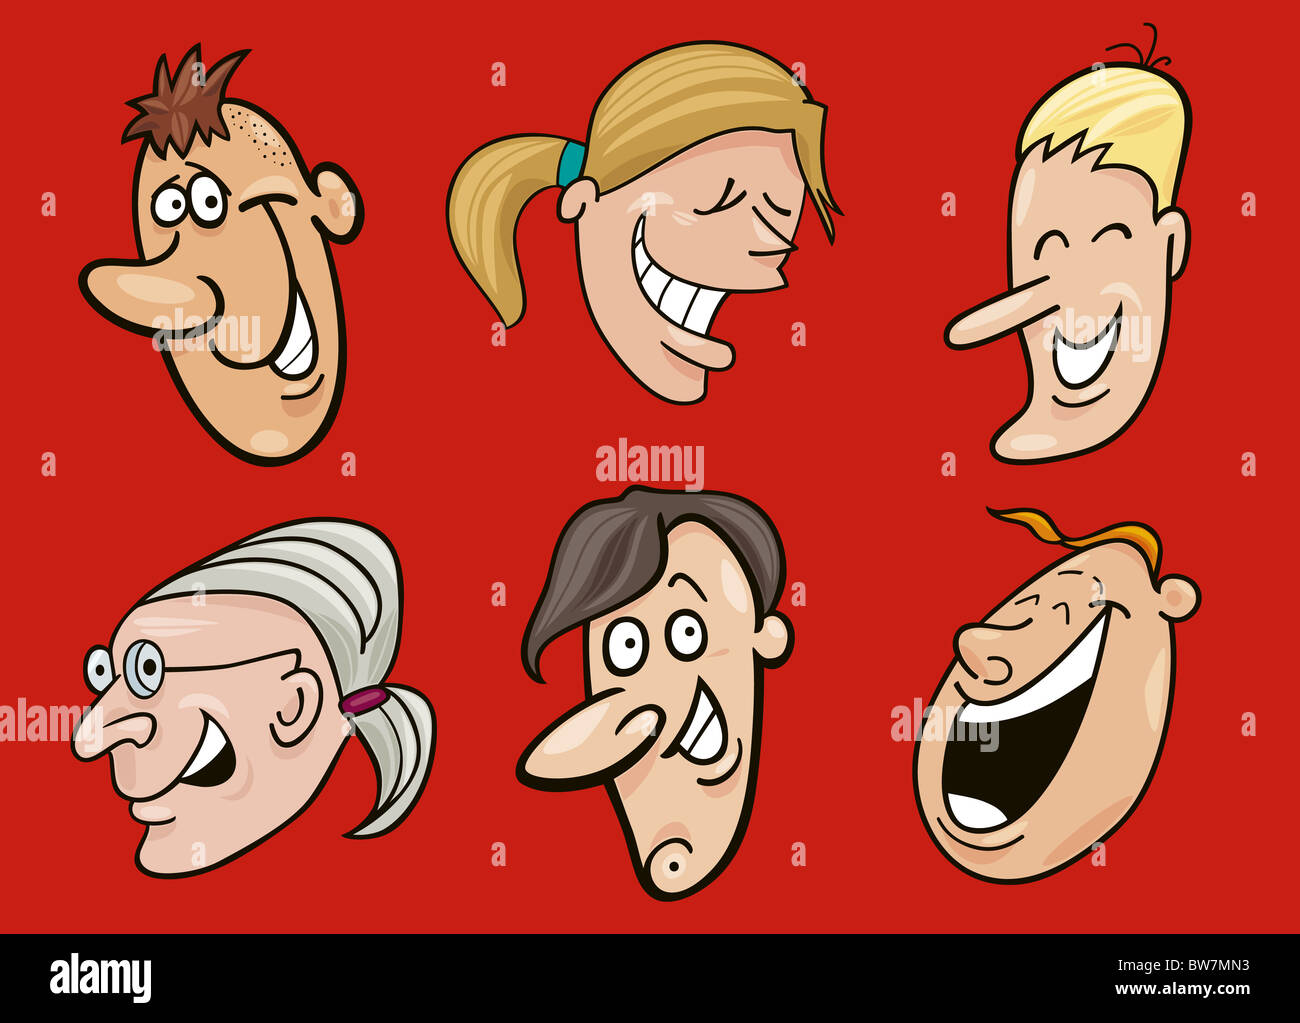 Cartoon illustration of set of happy faces Stock Photo